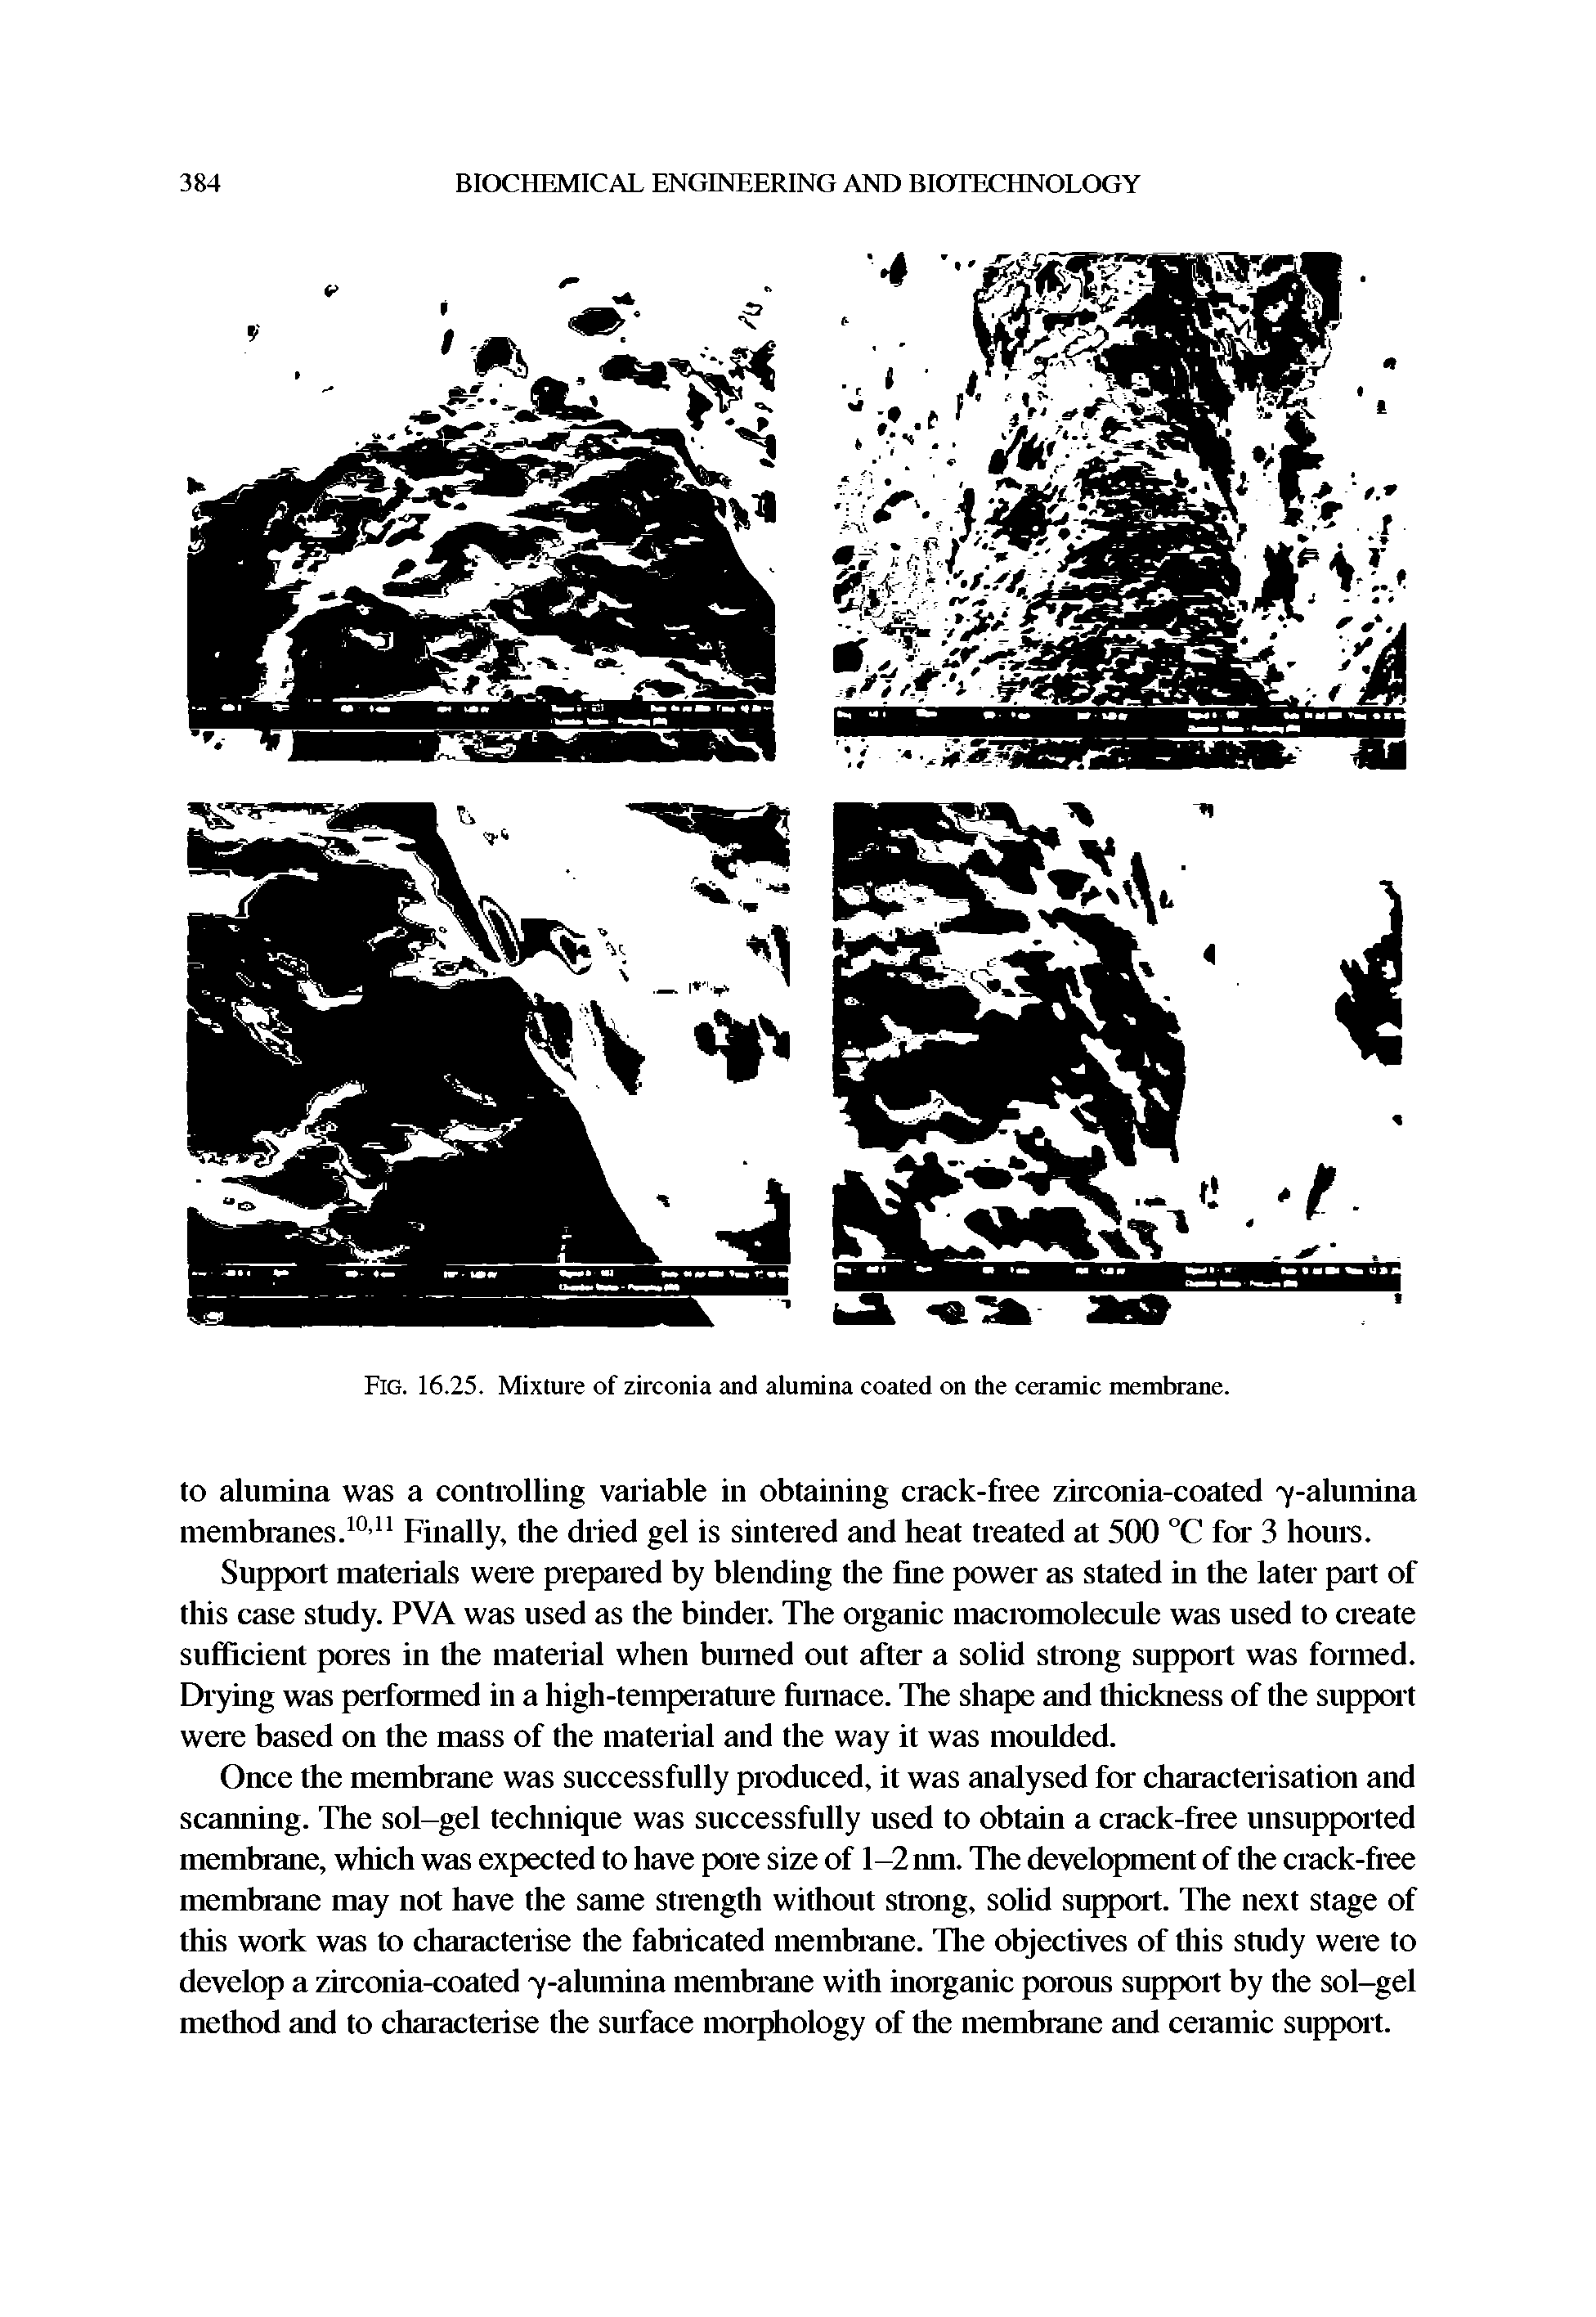 Fig. 16.25. Mixture of zirconia and alumina coated on the ceramic membrane.